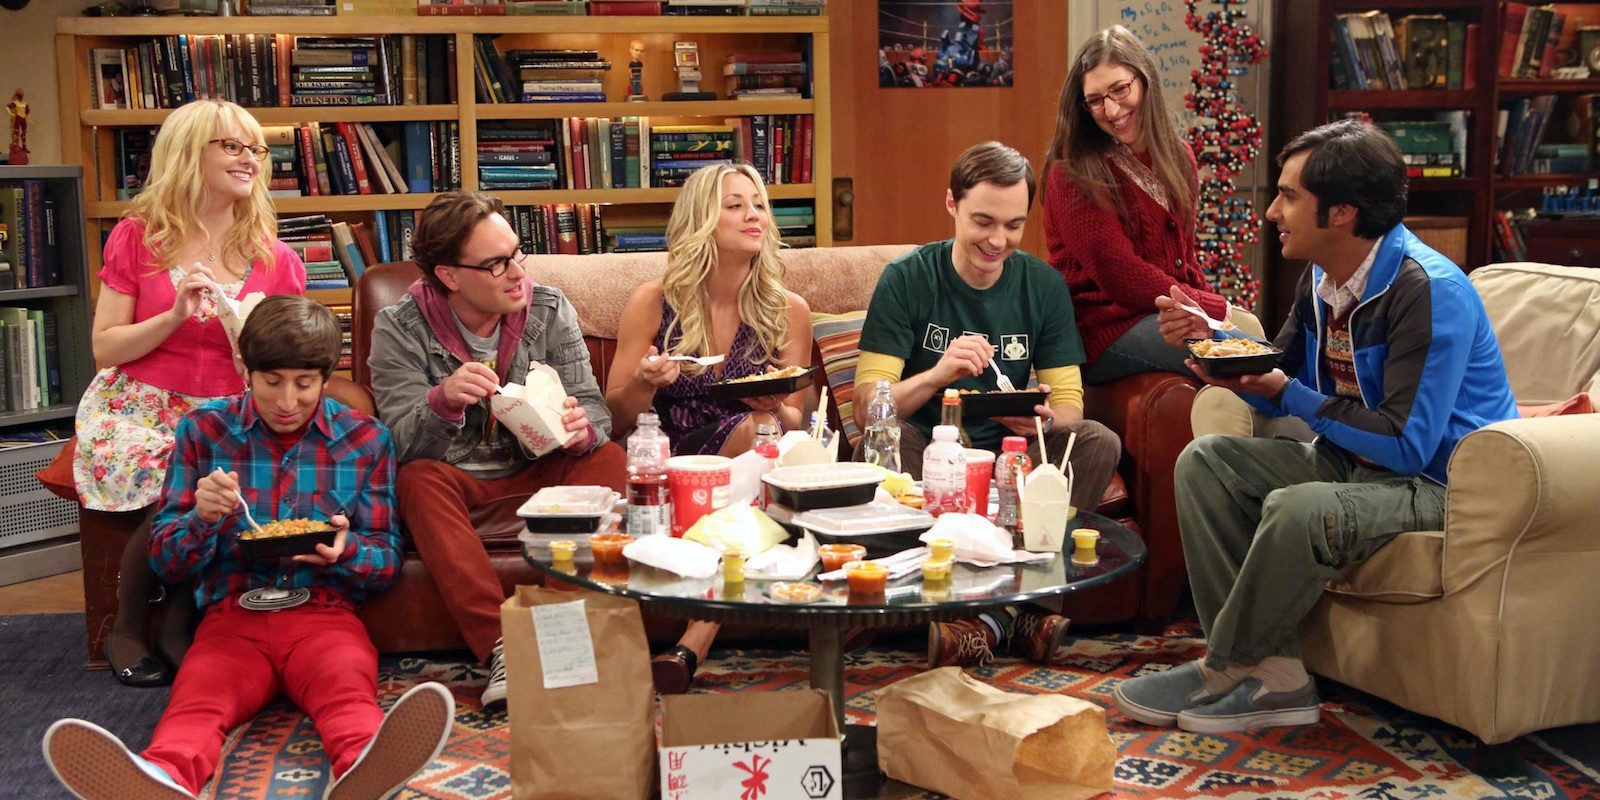 El estreno de la 10ª temporada de 'The Big Bang Theory' ha sido un éxito